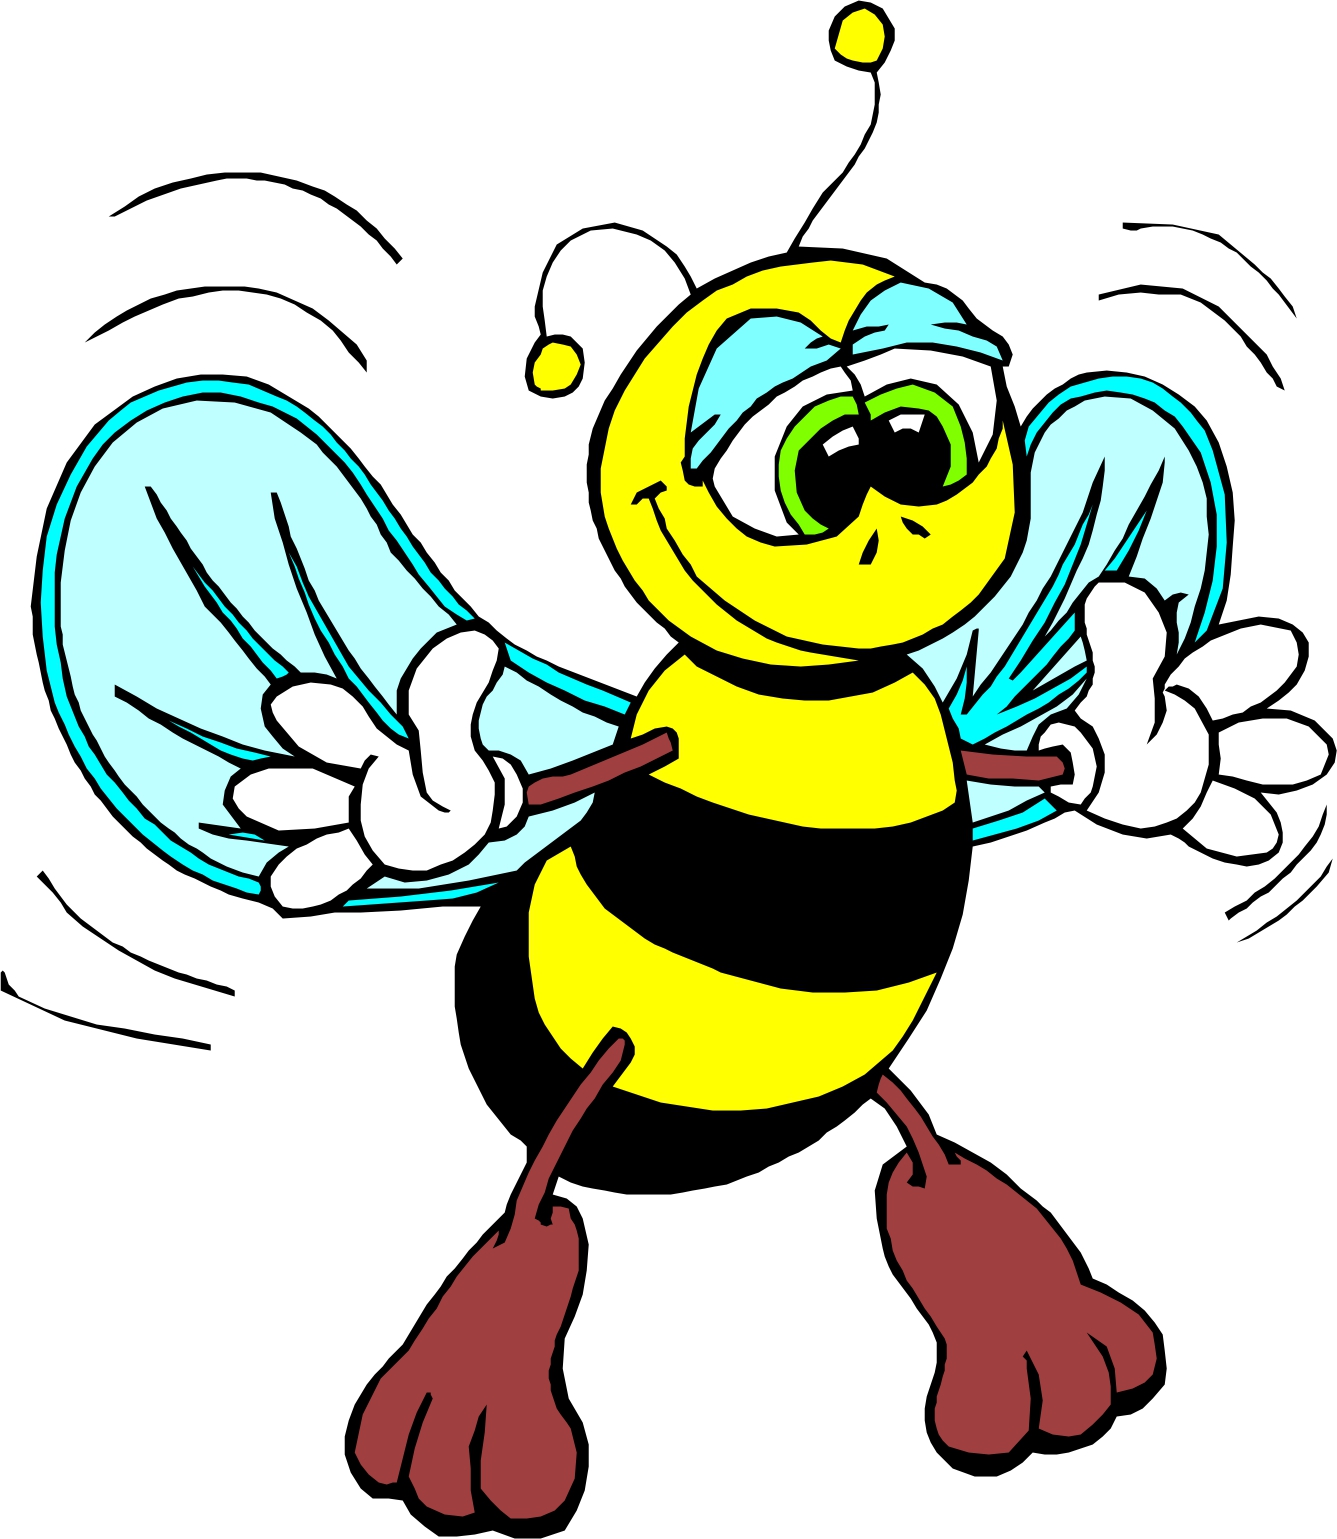 Cartoon Honey Bee Images & Pictures - Becuo